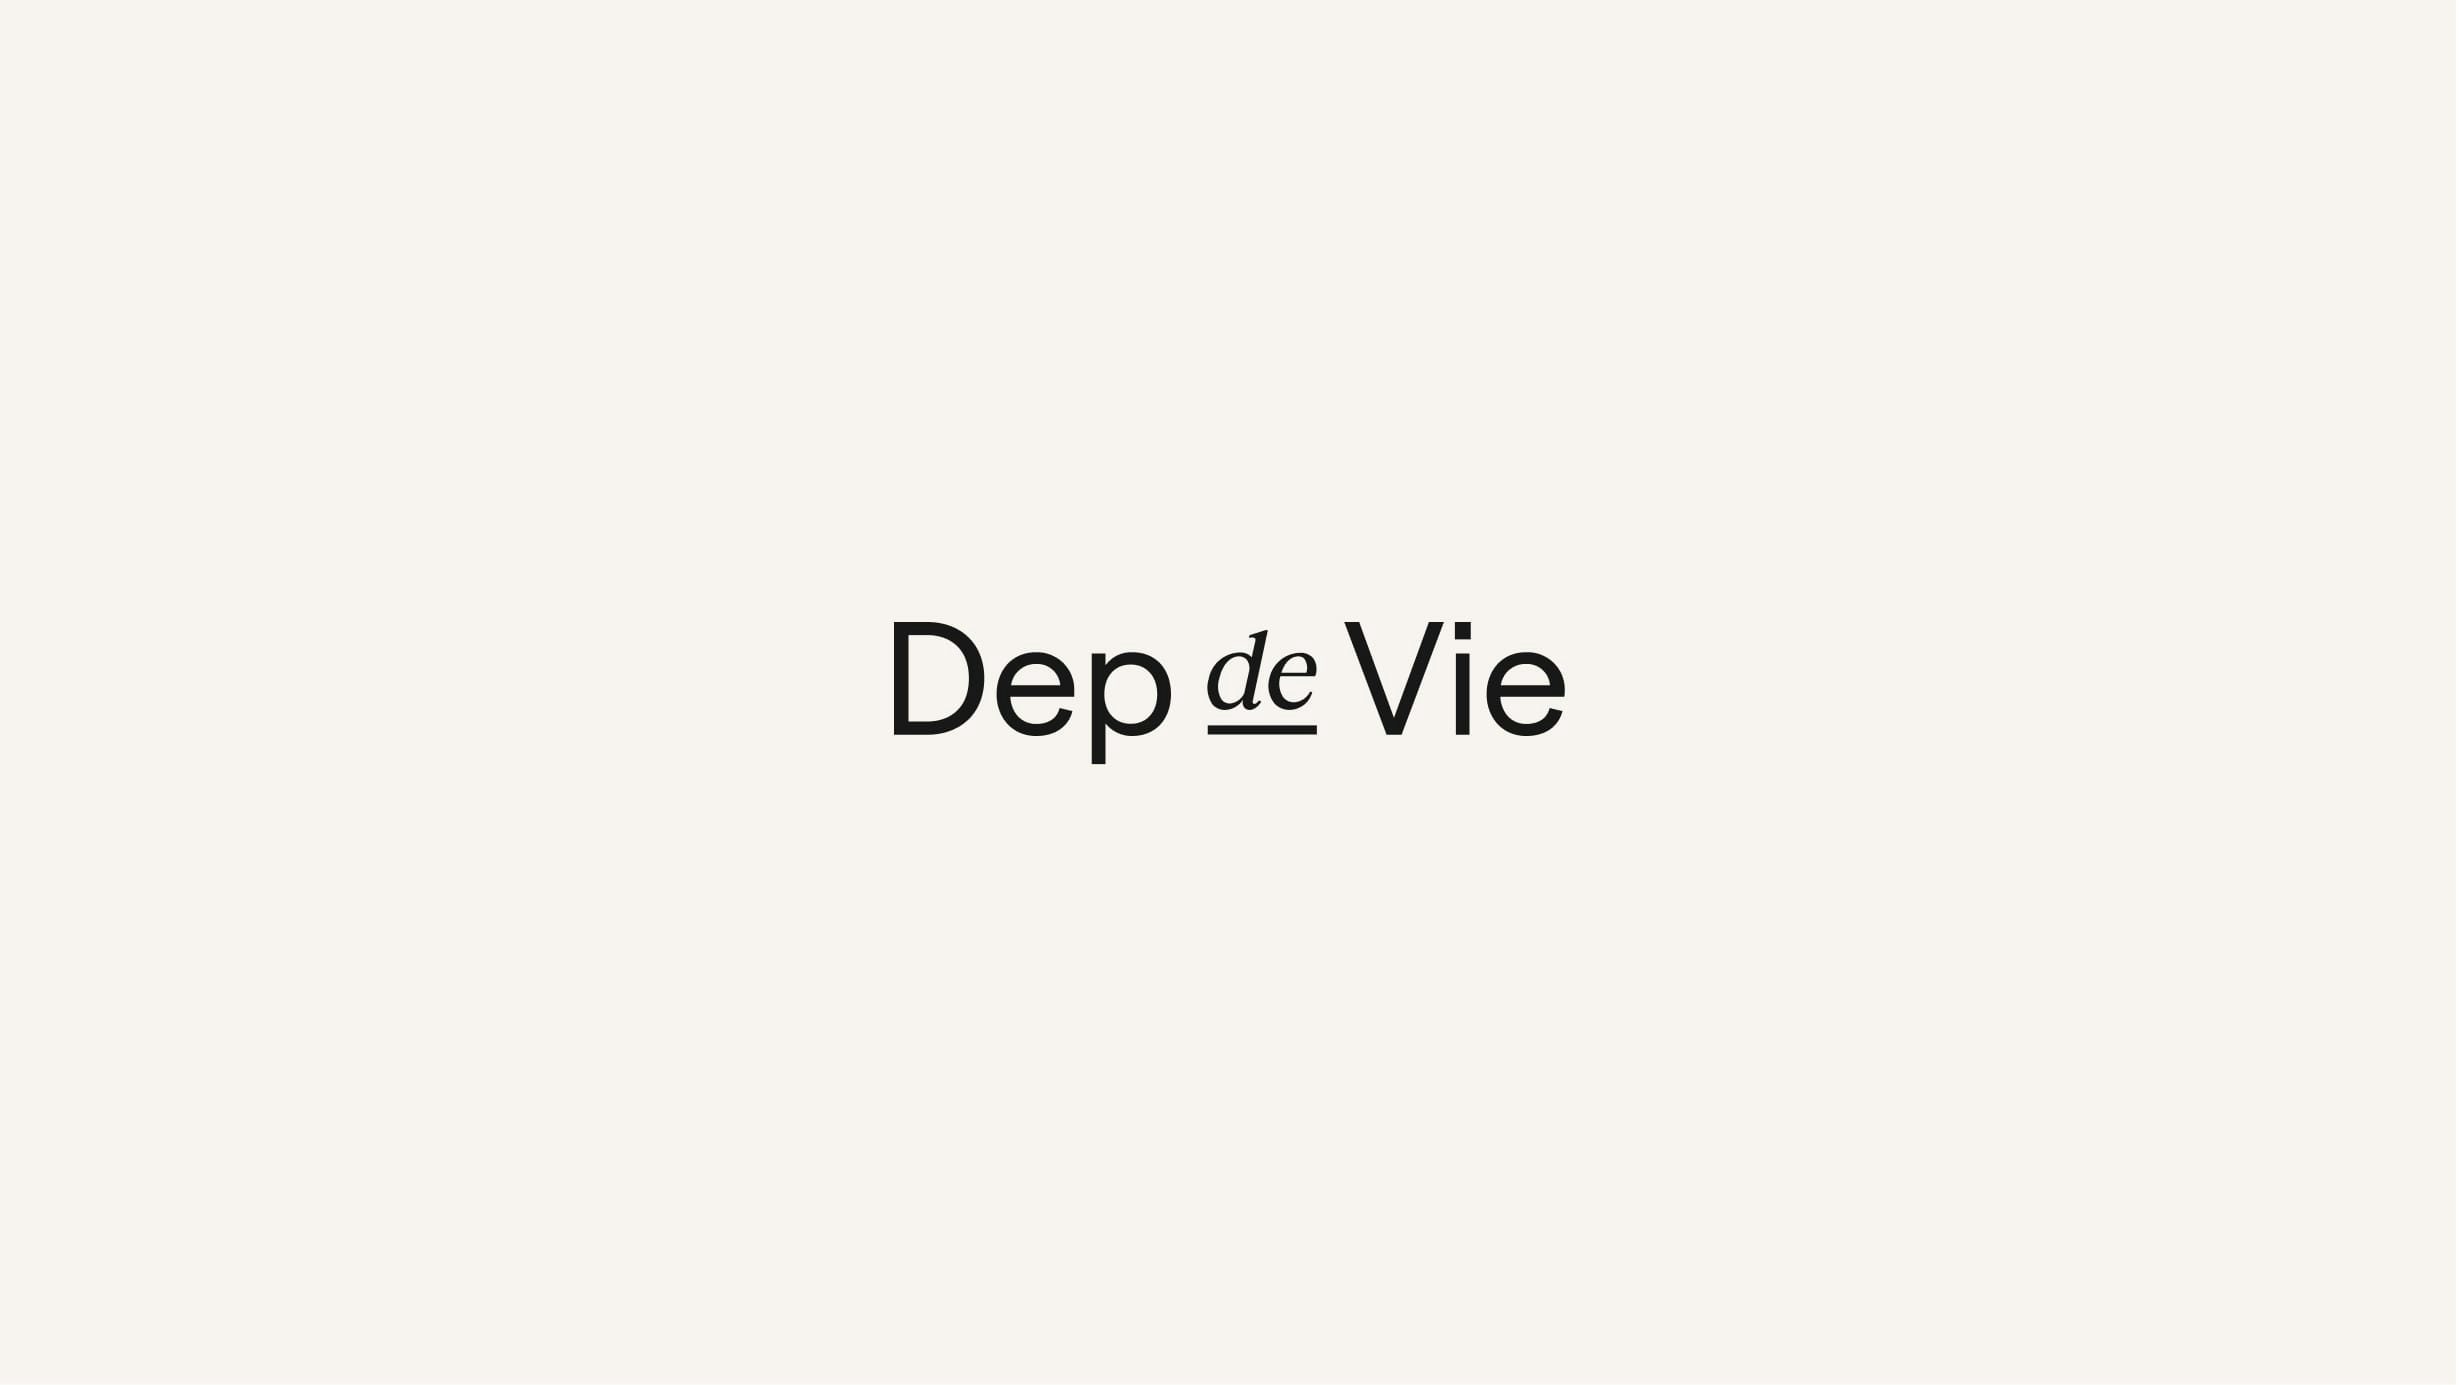 DepdeVie_2022_Mockup_Logo.jpg